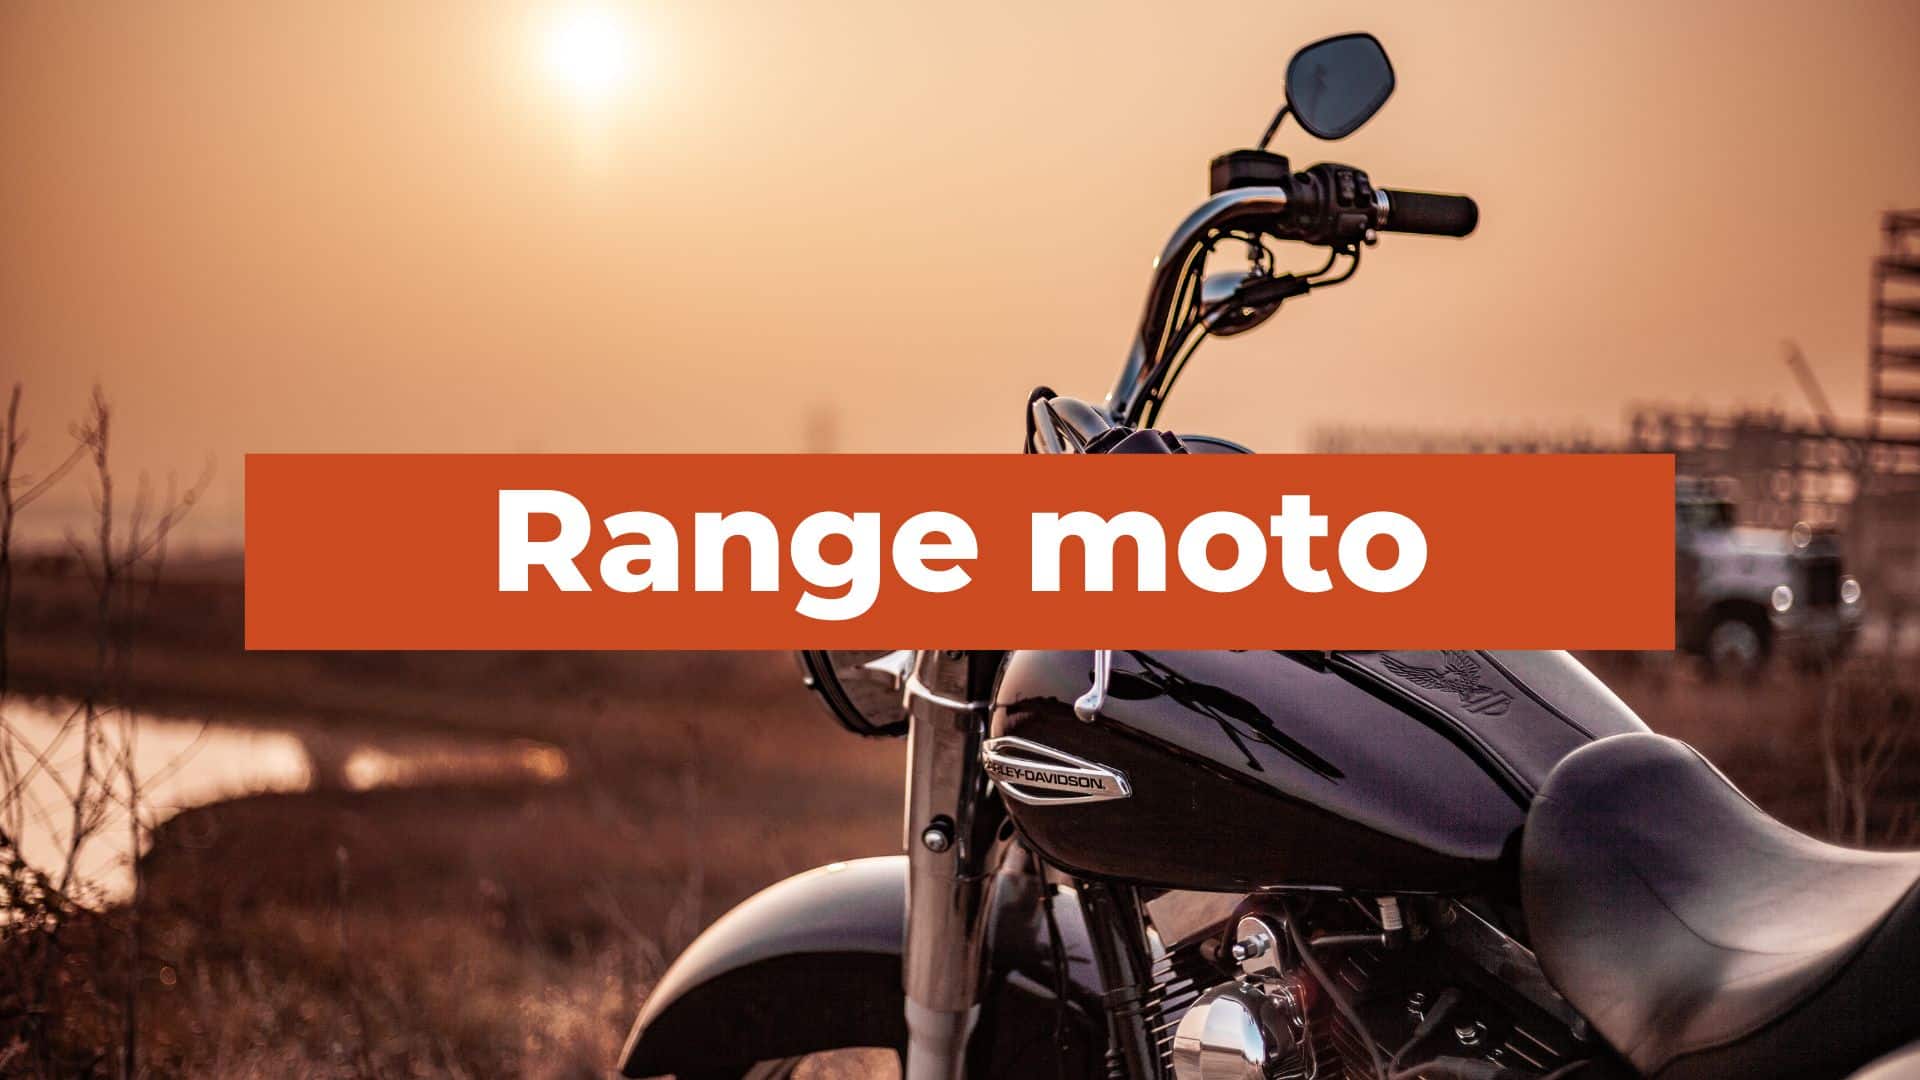 Range moto